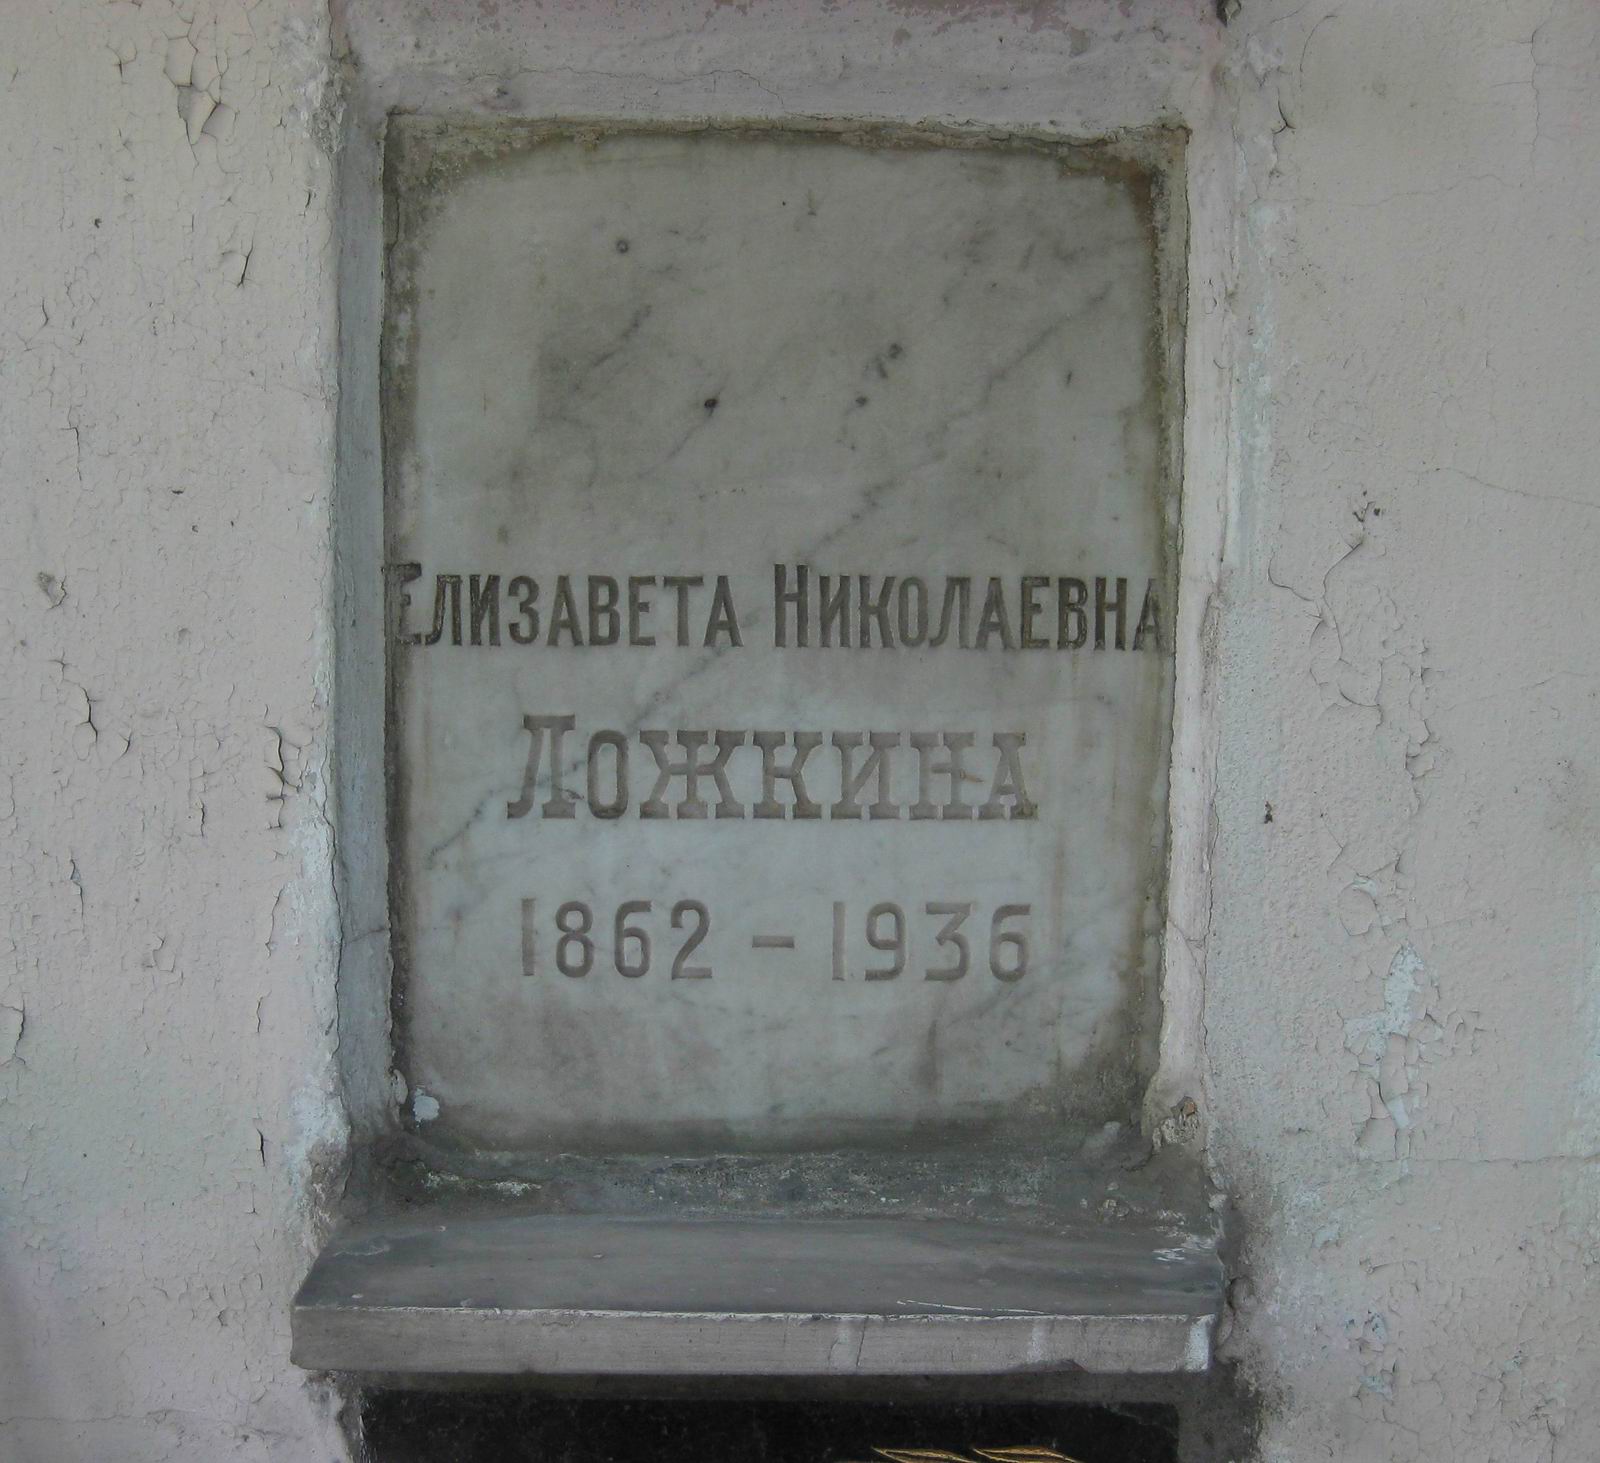 Плита на нише Ложкиной Е.Н. (1862-1936), на Новодевичьем кладбище (колумбарий [21]-3-2).